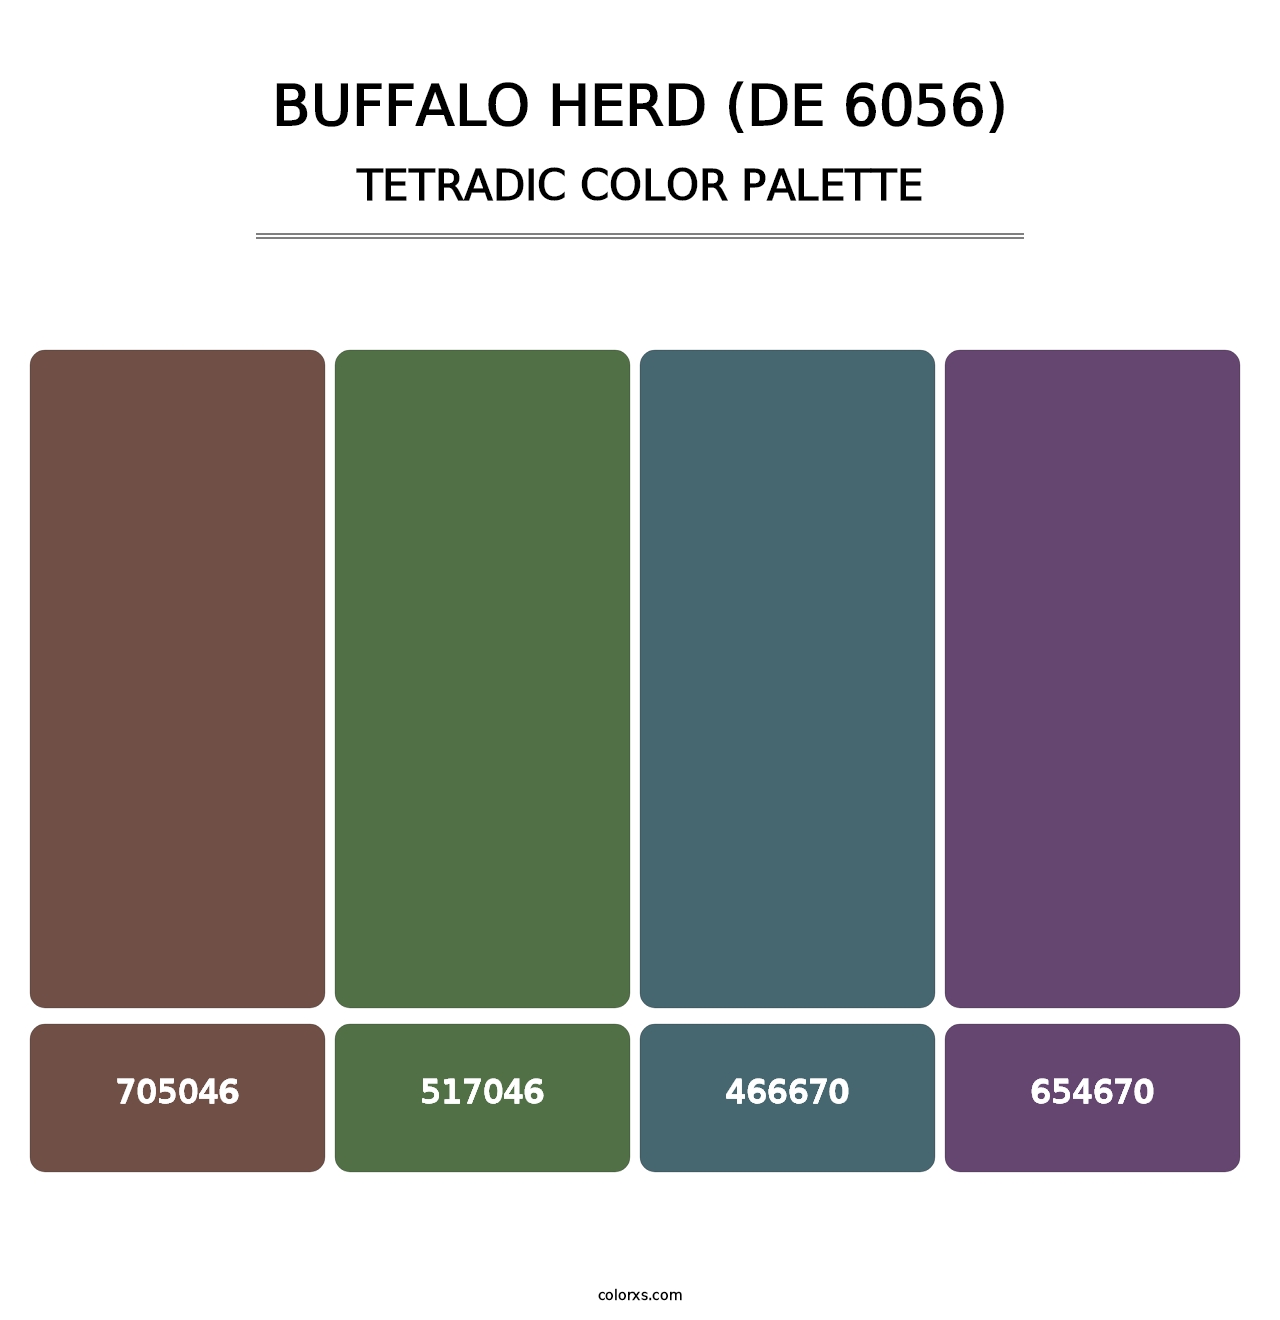 Buffalo Herd (DE 6056) - Tetradic Color Palette